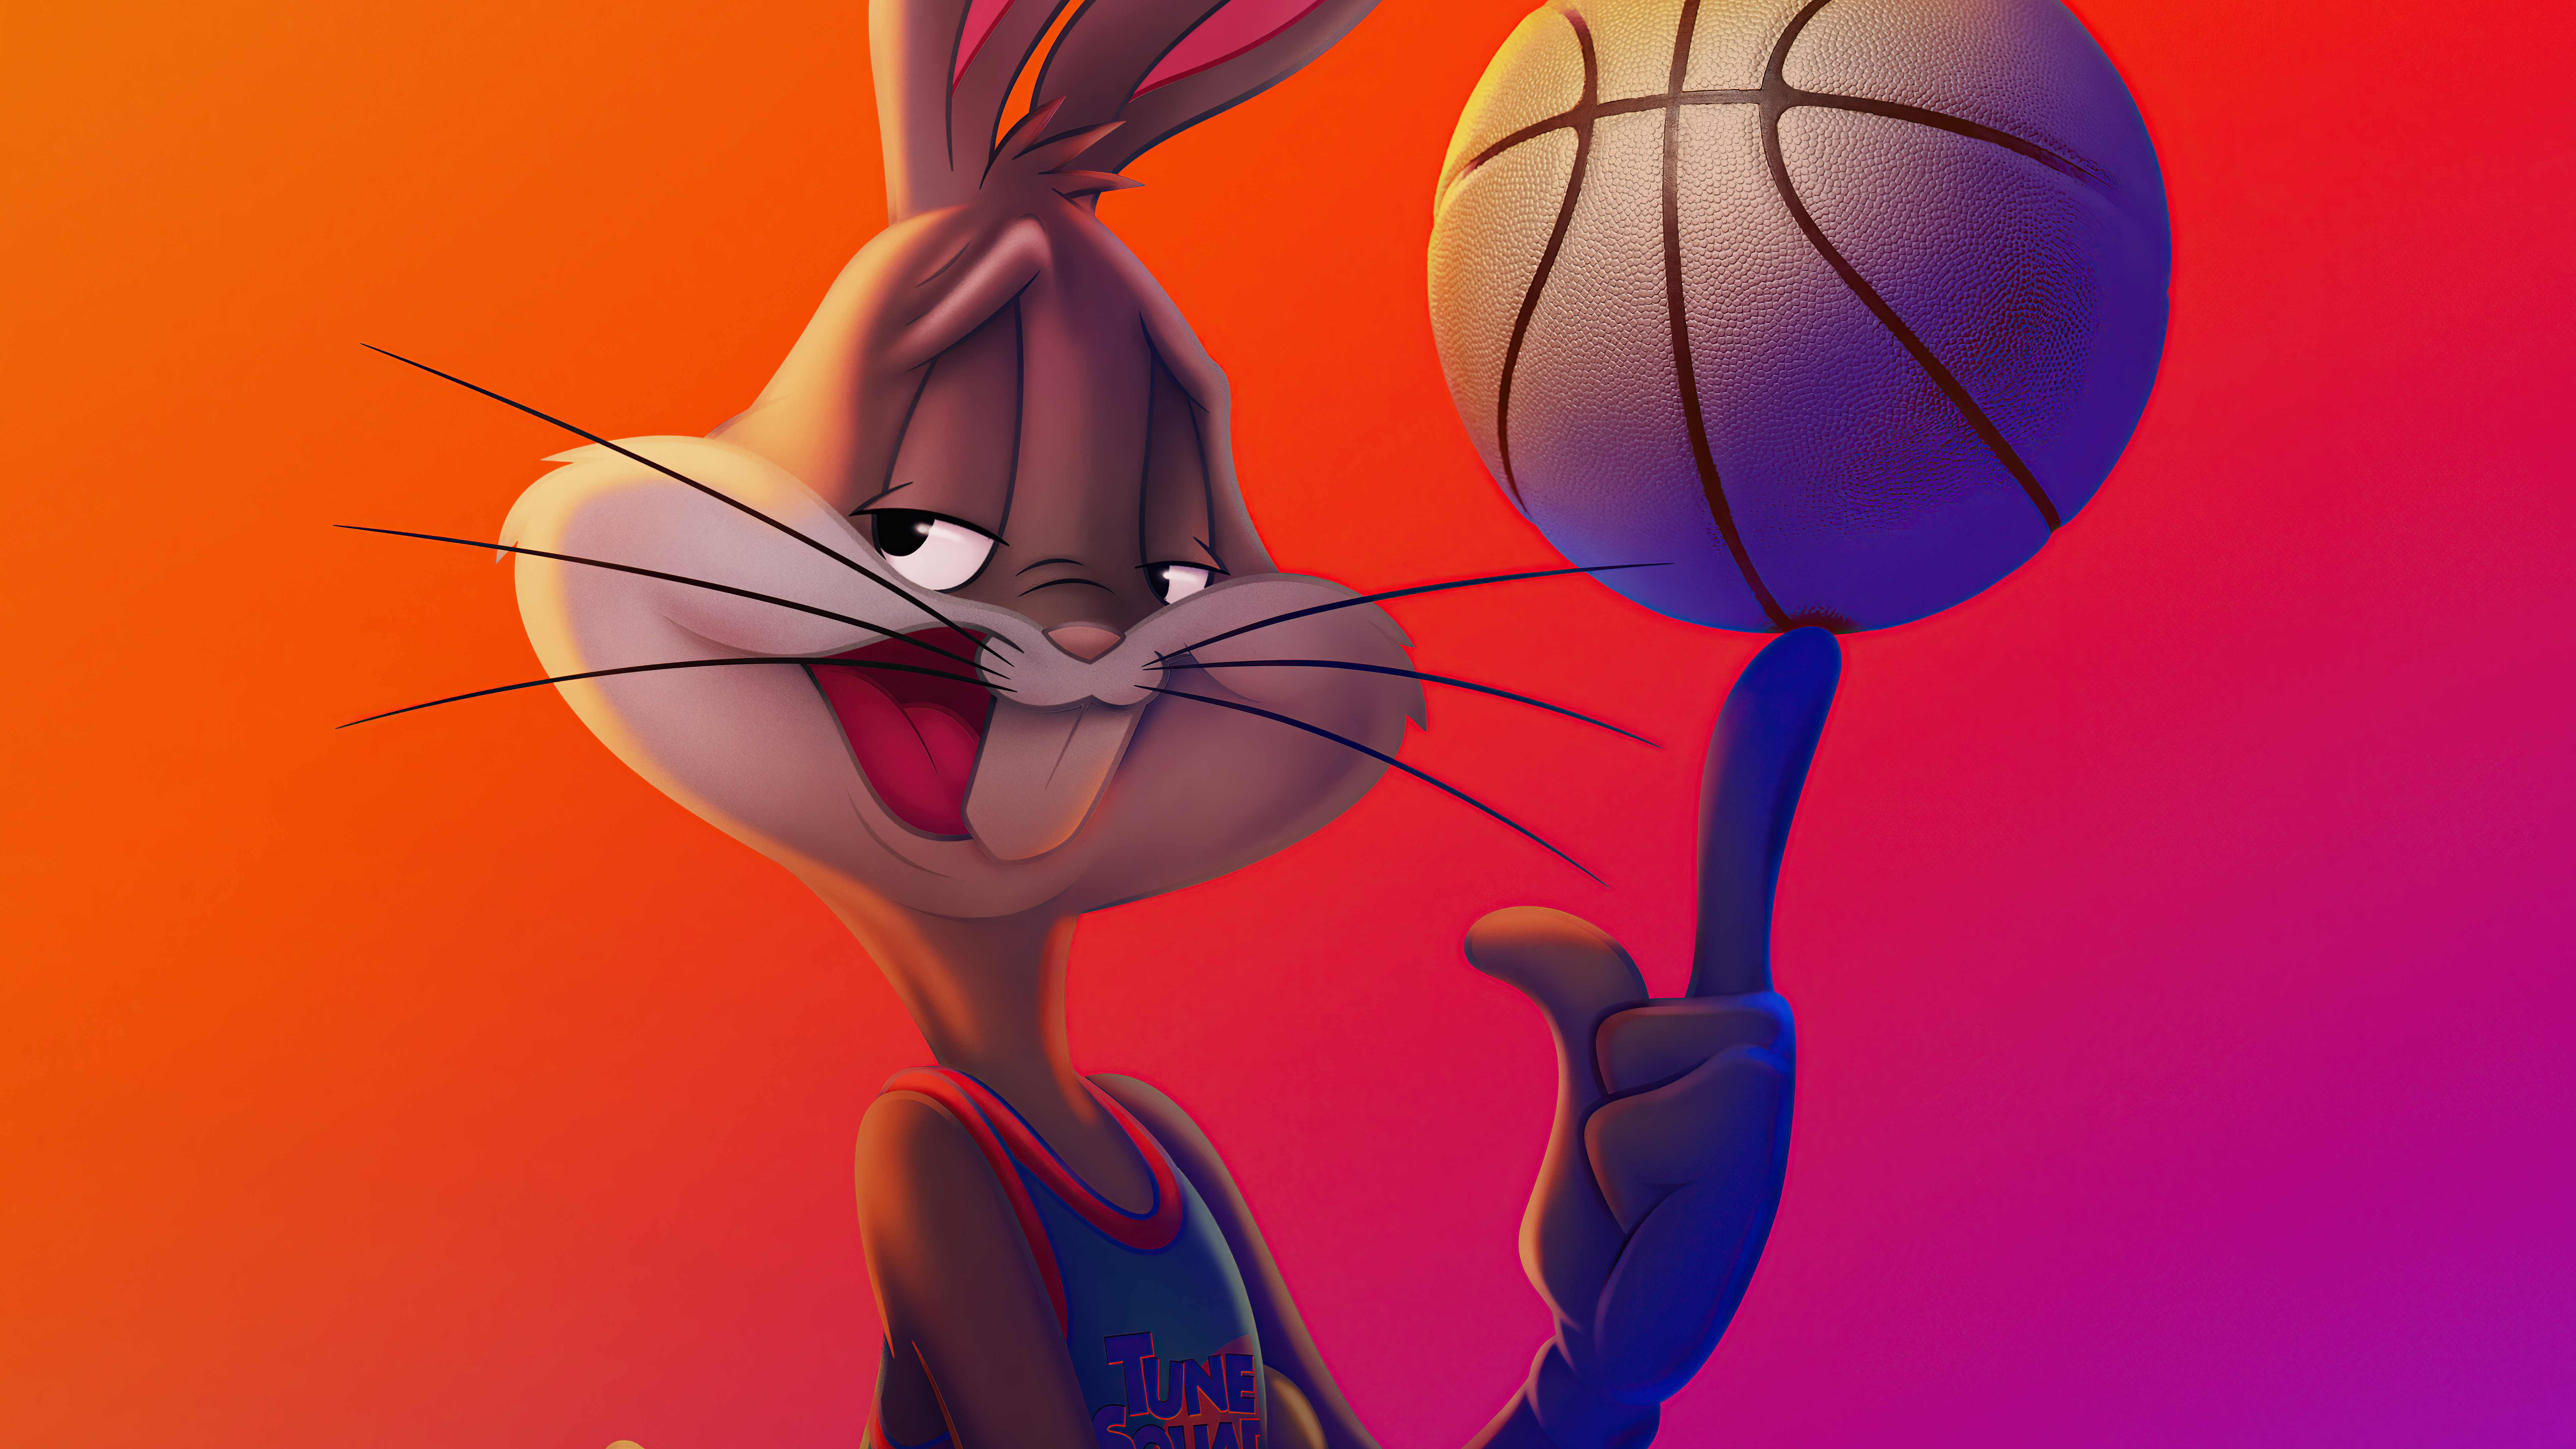 Bugs Bunny 8k Ultra HD Wallpapers.